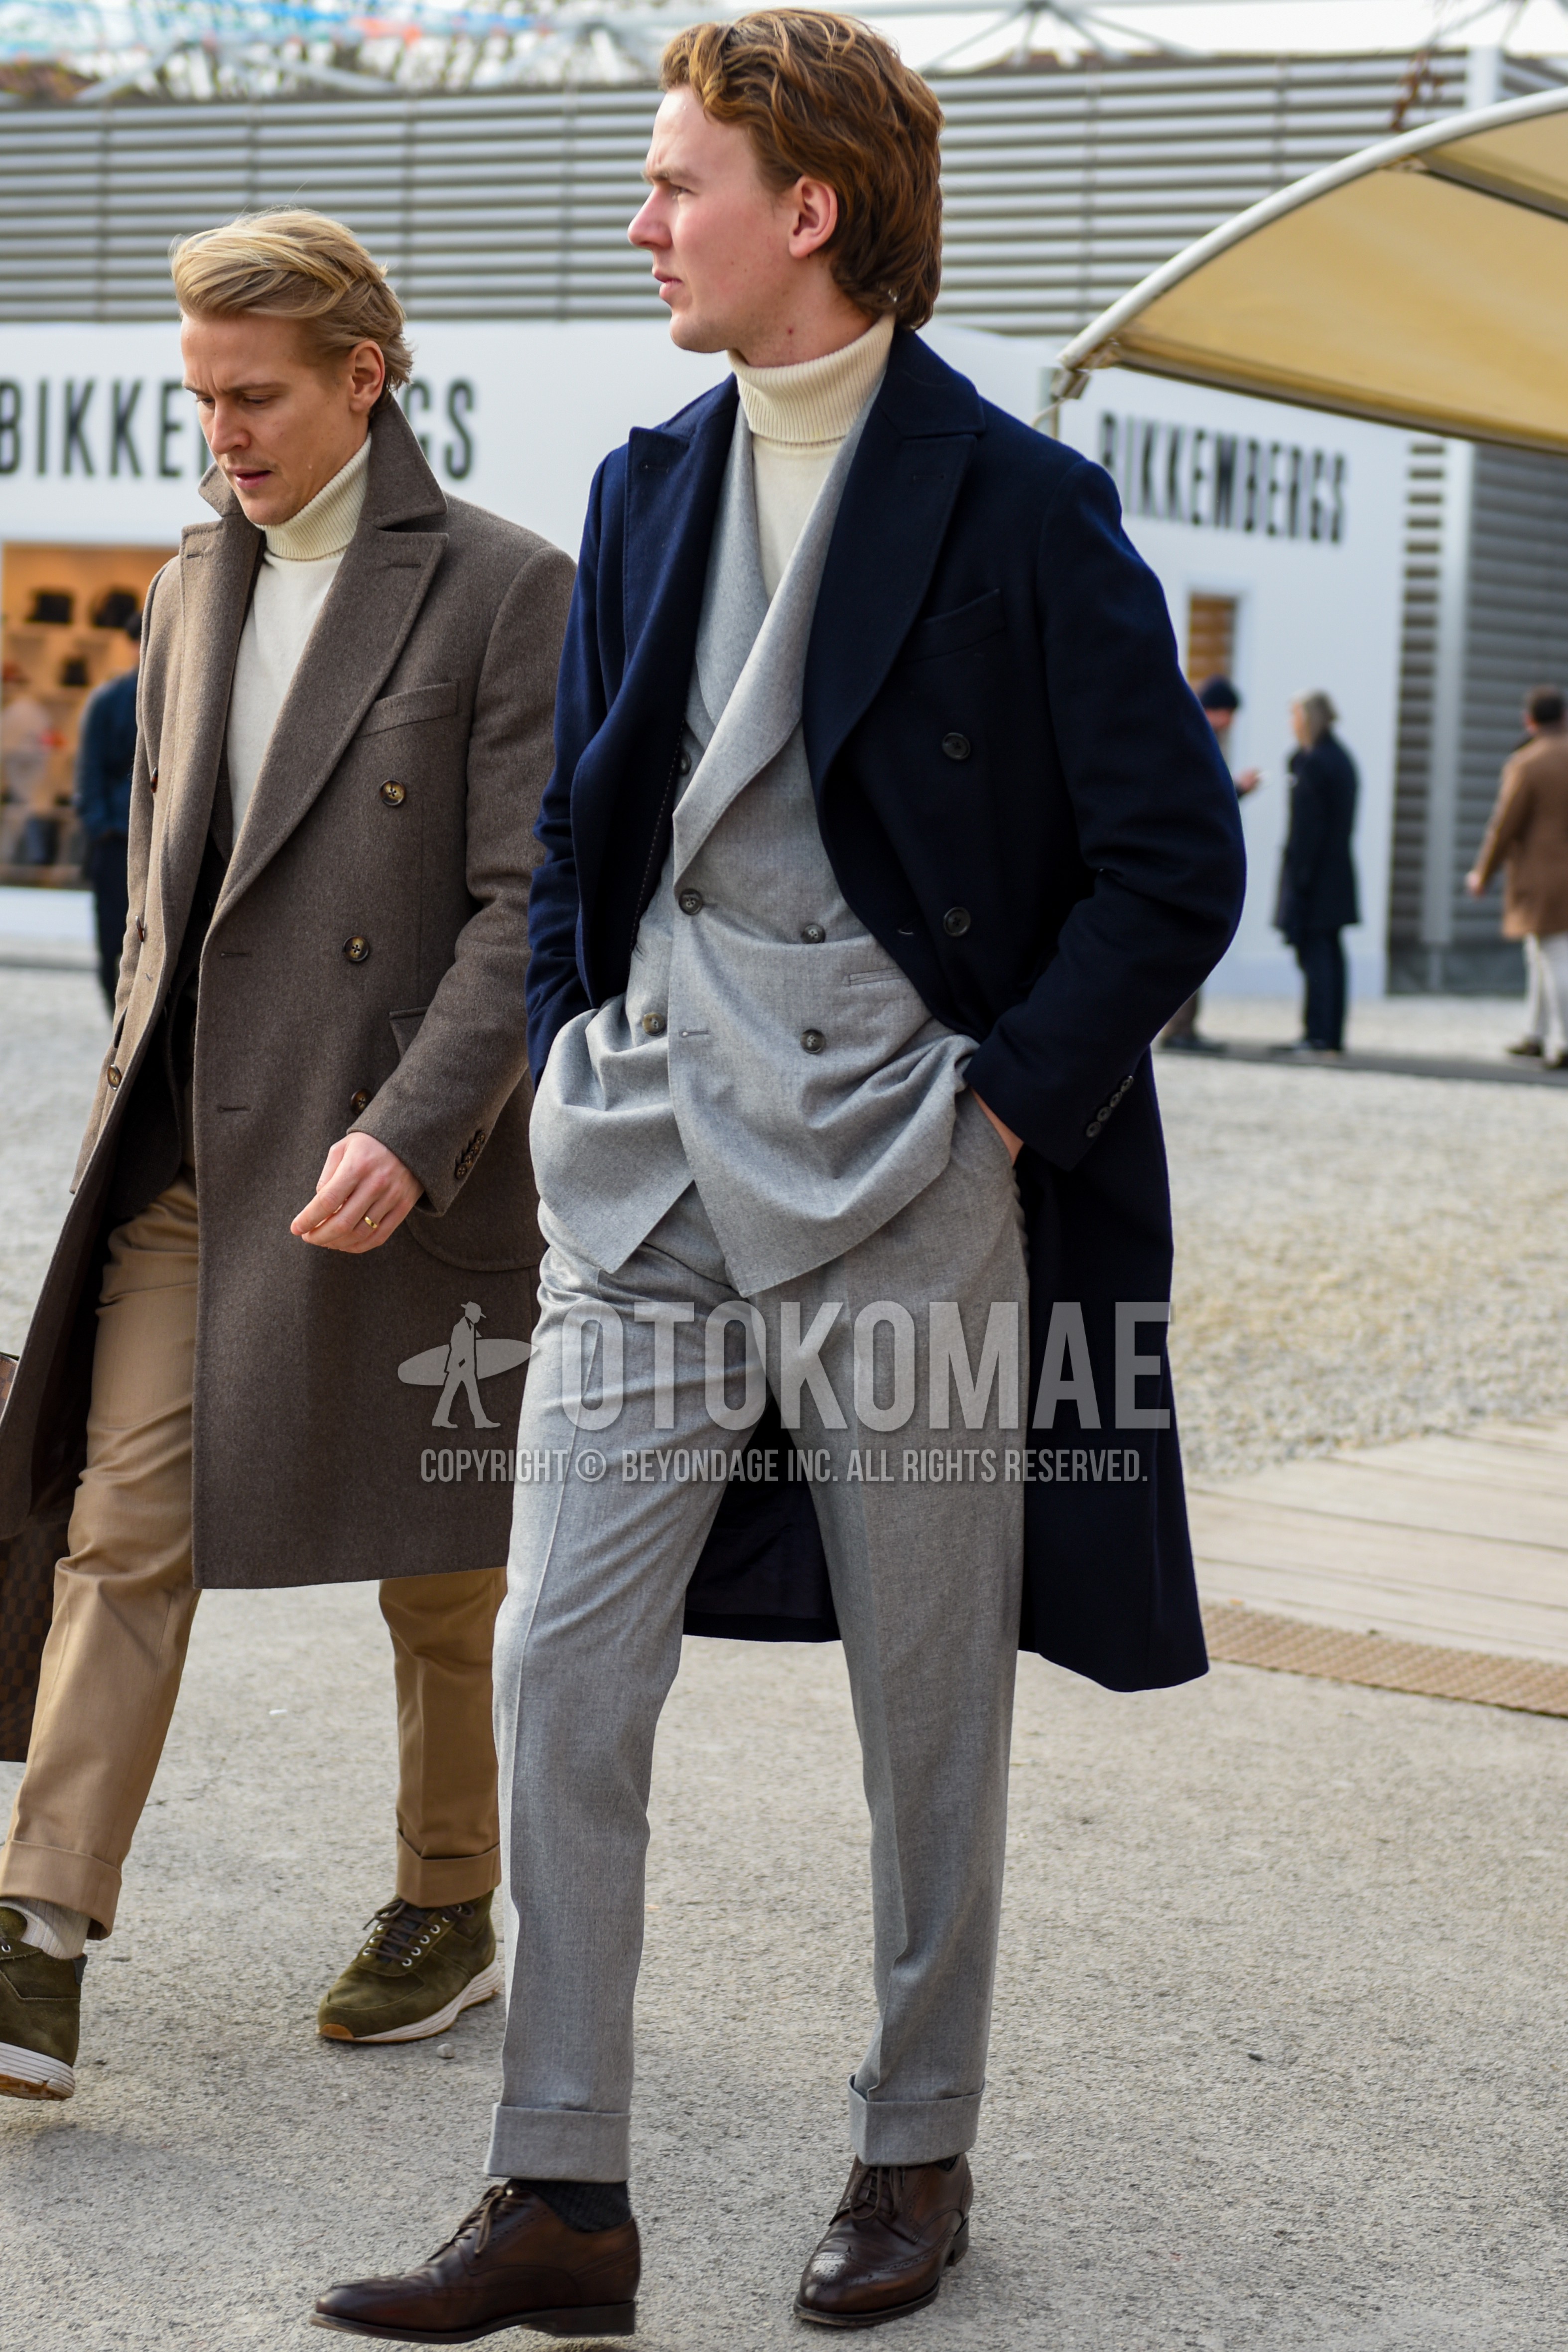 Men's autumn winter outfit with navy plain chester coat, white plain turtleneck knit, navy plain socks, brown wing-tip shoes leather shoes, gray plain suit.